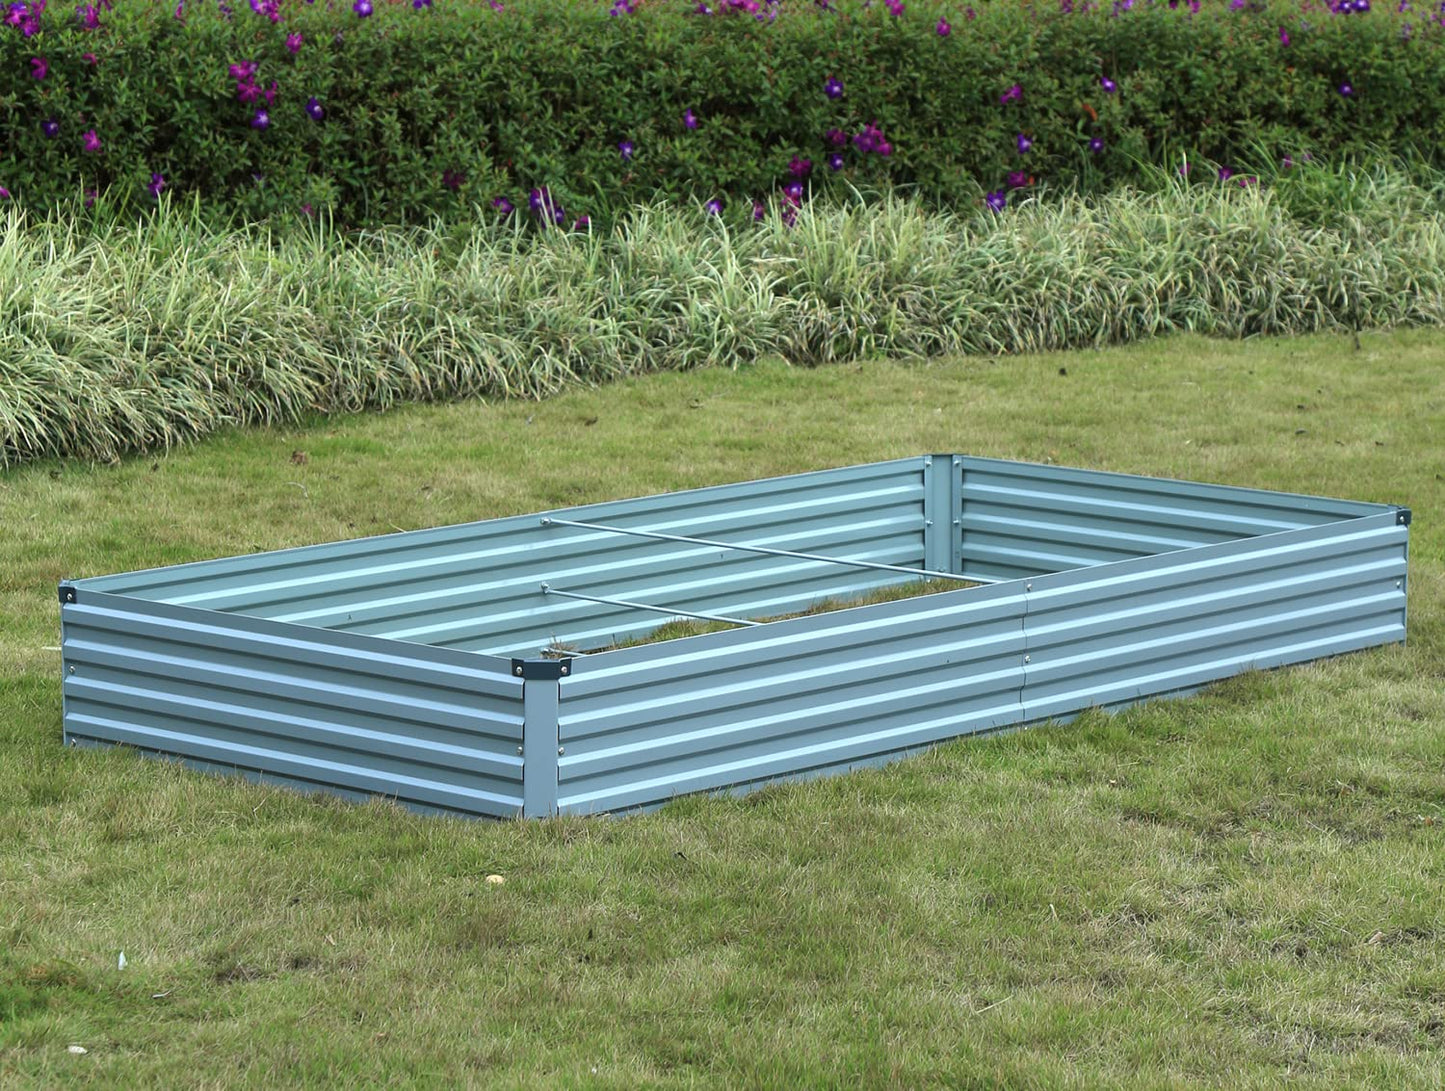 Meberam Metal Raised Garden Bed Kit 2PCS Set 6x3x1ft Outdoor Bottomless Galvanized Elevated Plant Box for Vegetable Flower, Grey